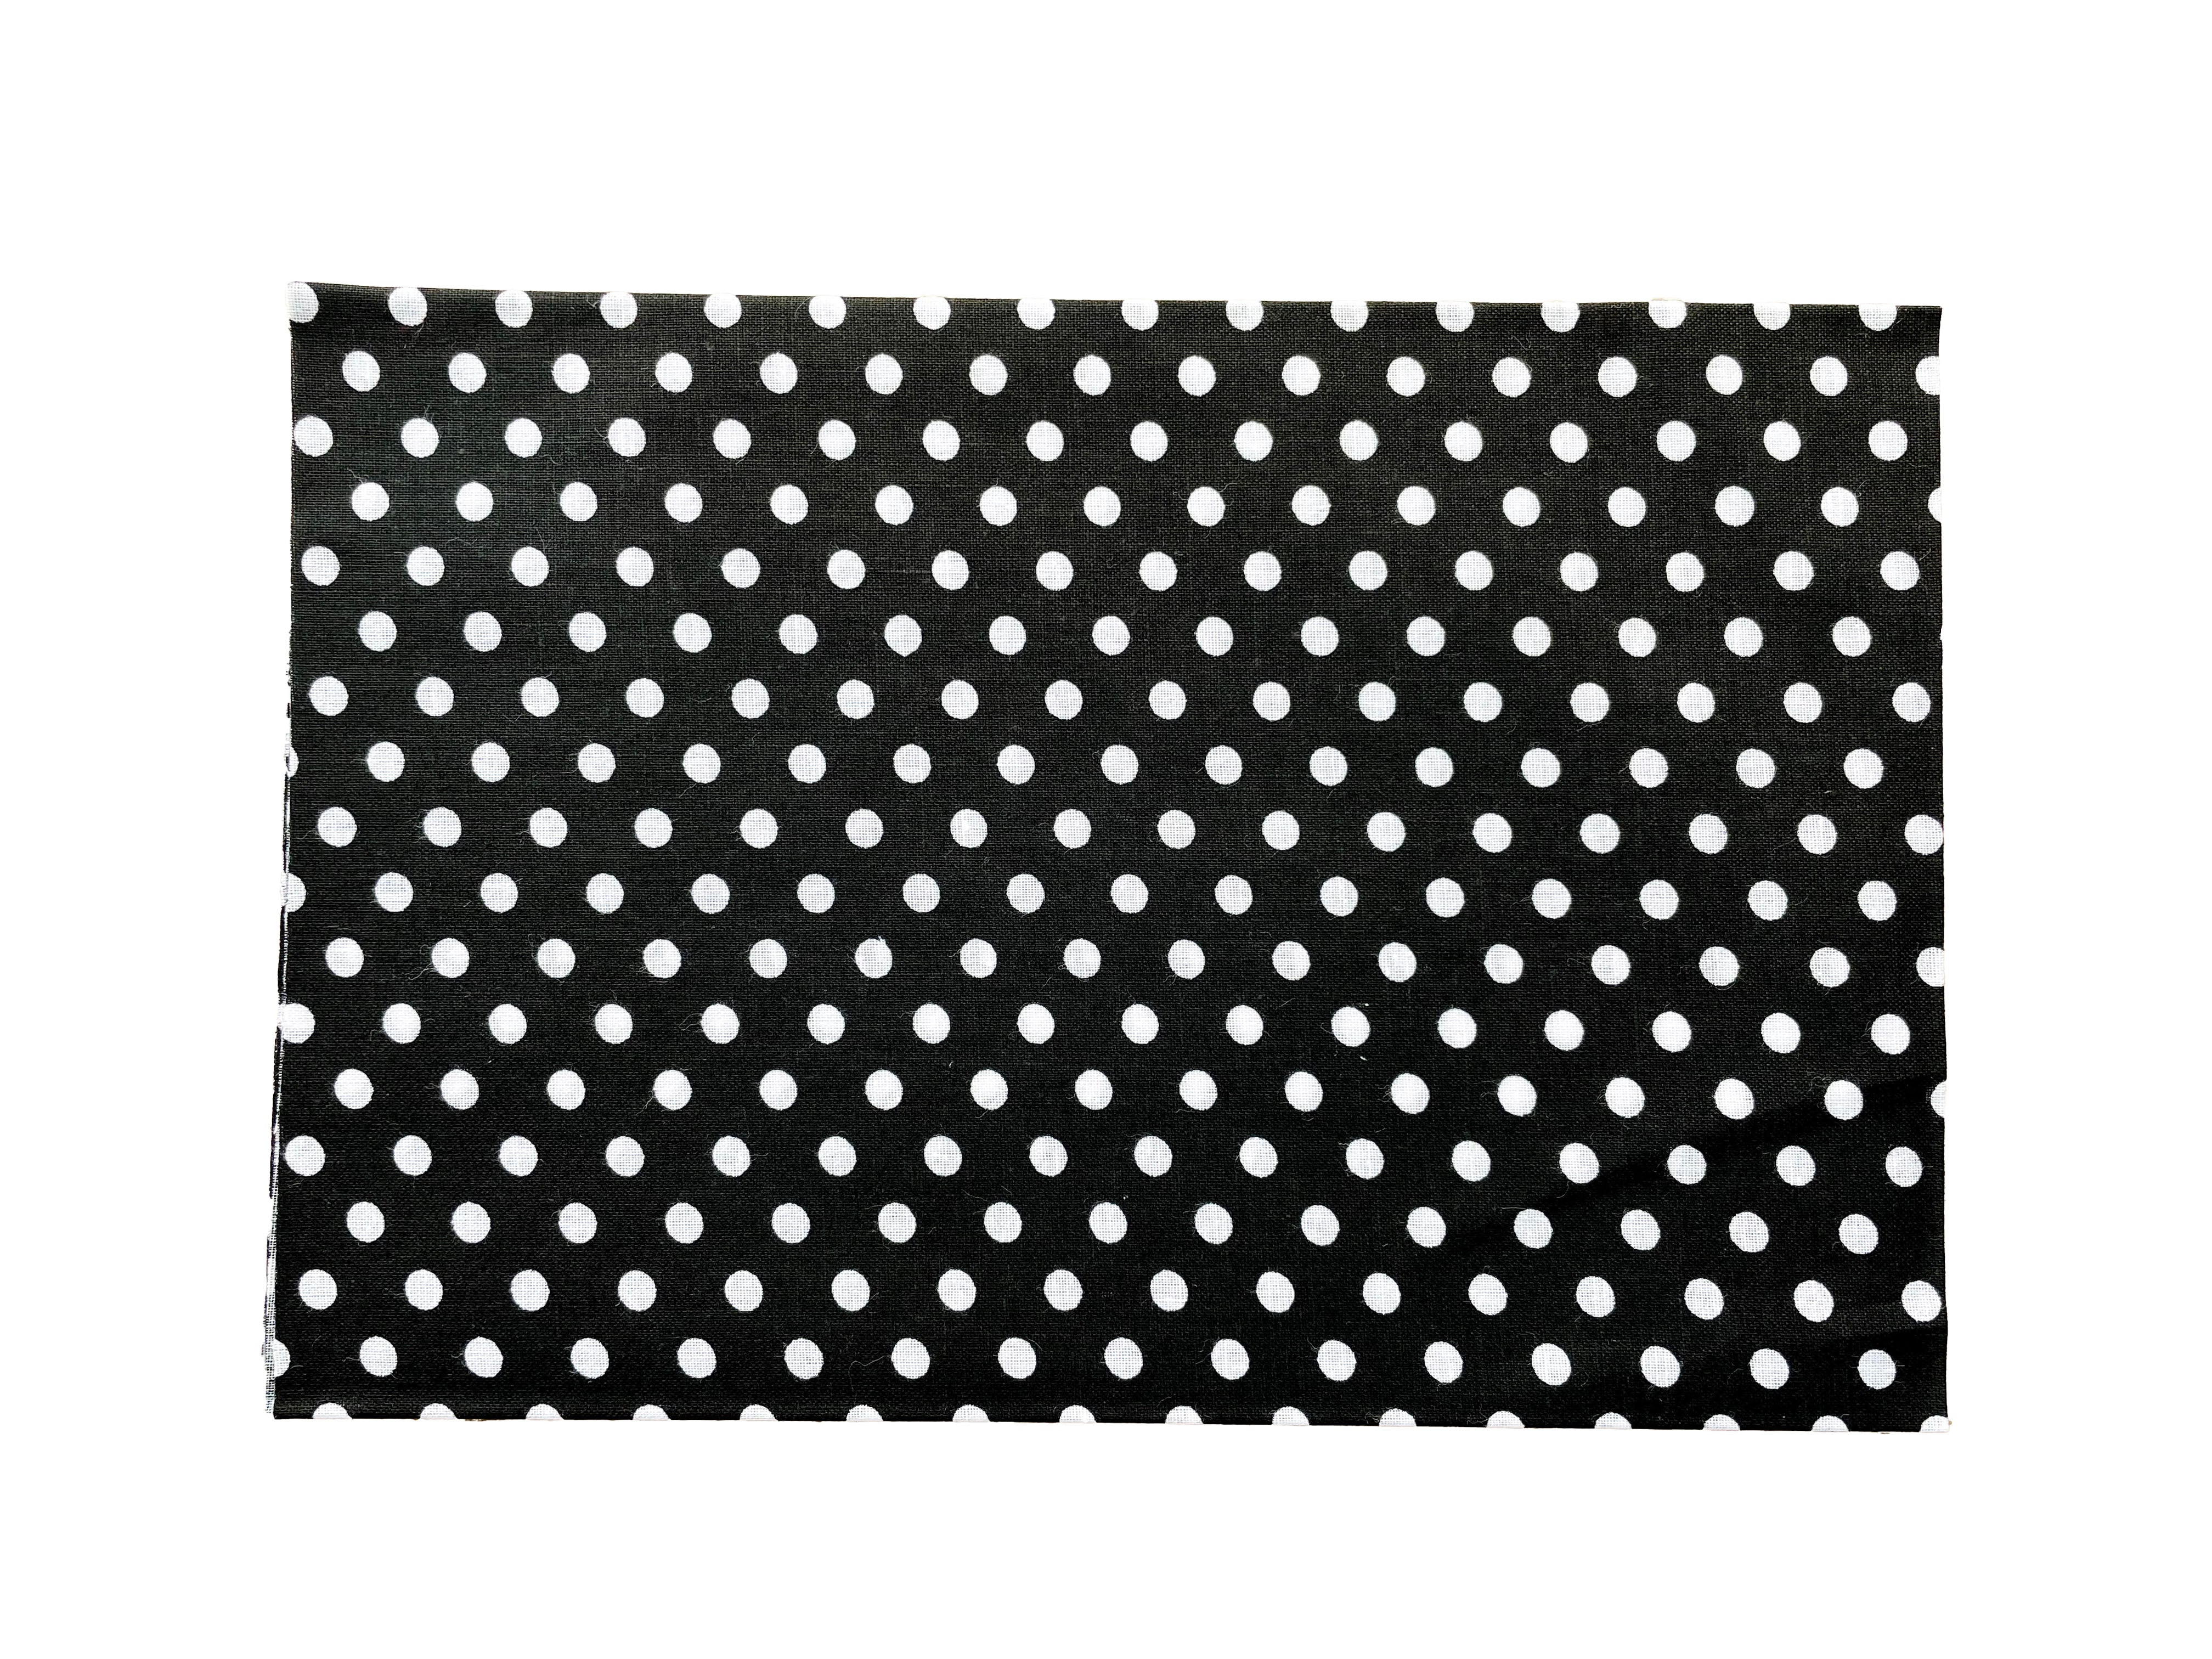 White Polka Dots on Black Fat Quarters Fabric